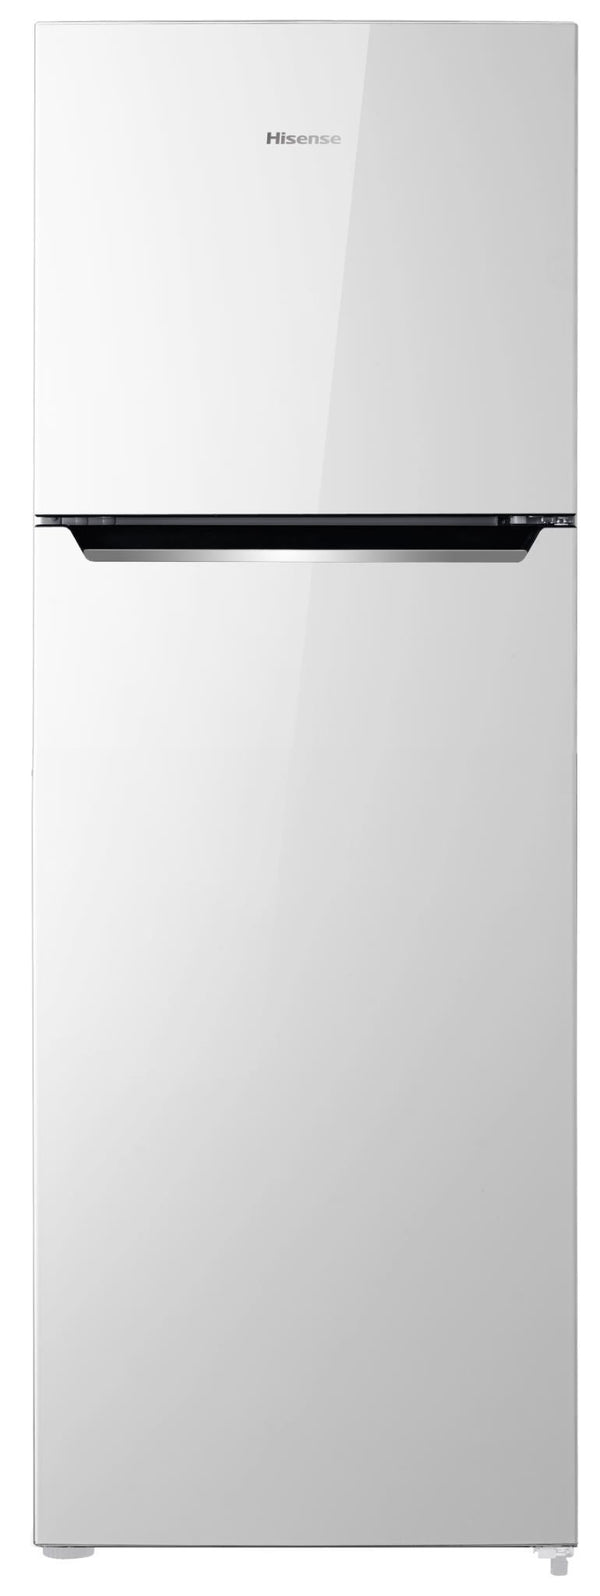  Hisense hr6tff350 350l top mount fridge (white)